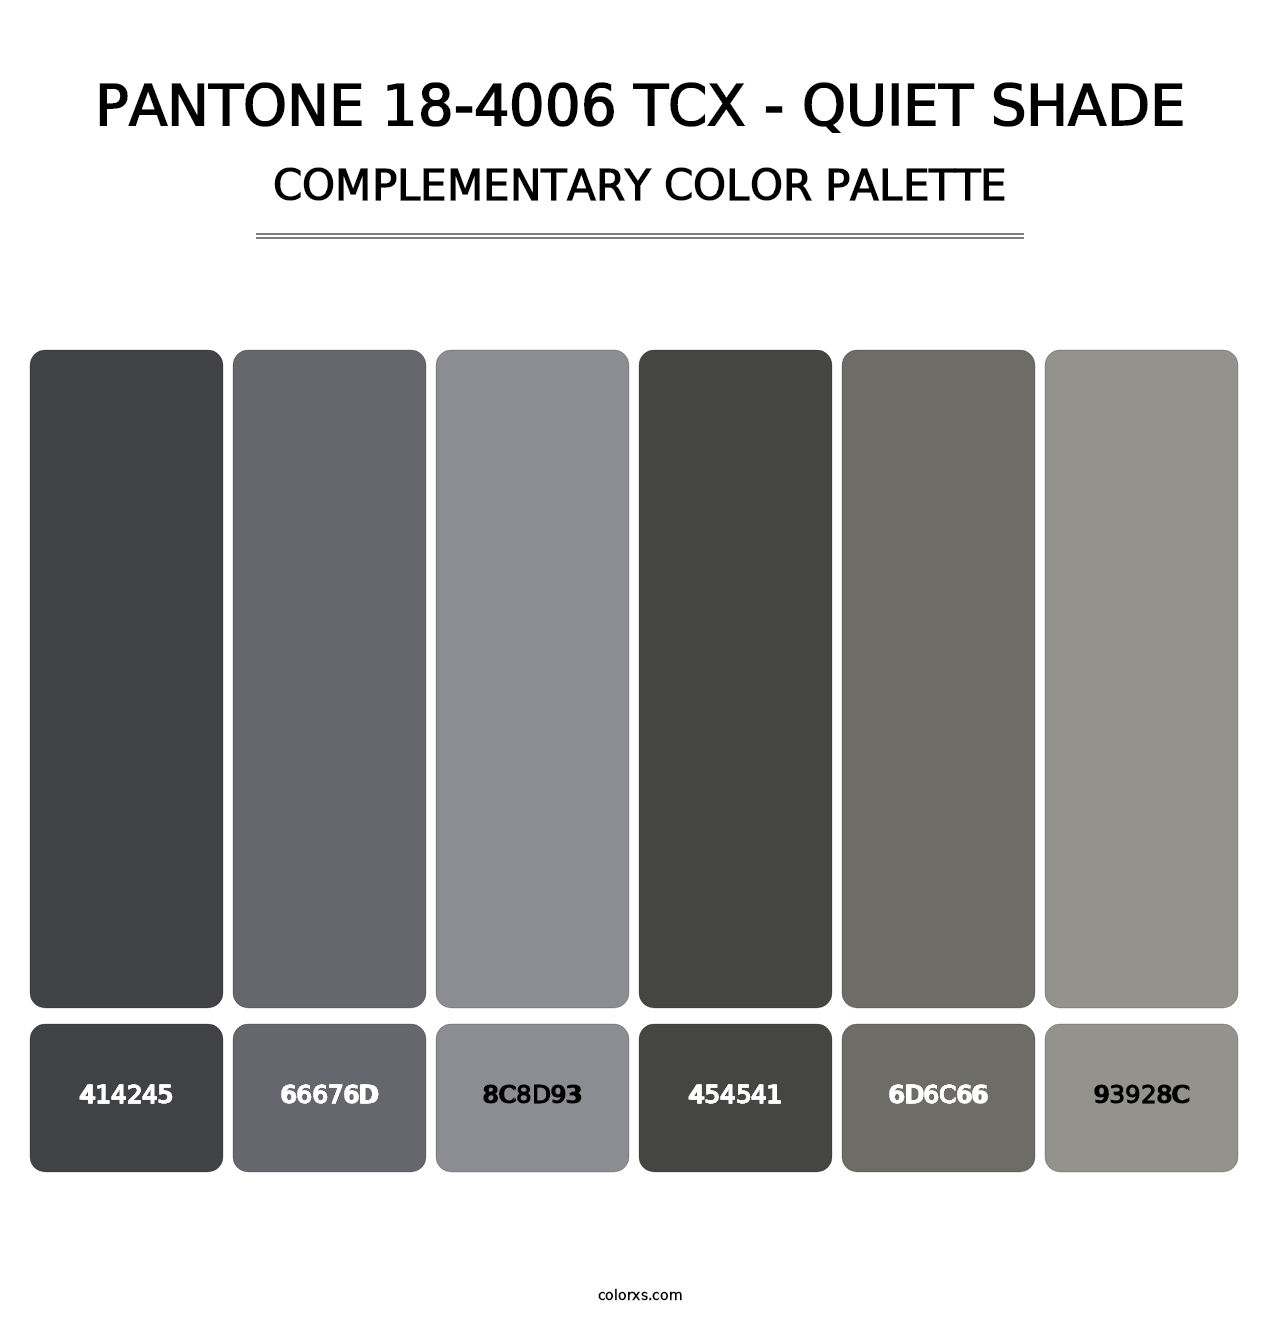 PANTONE 18-4006 TCX - Quiet Shade - Complementary Color Palette